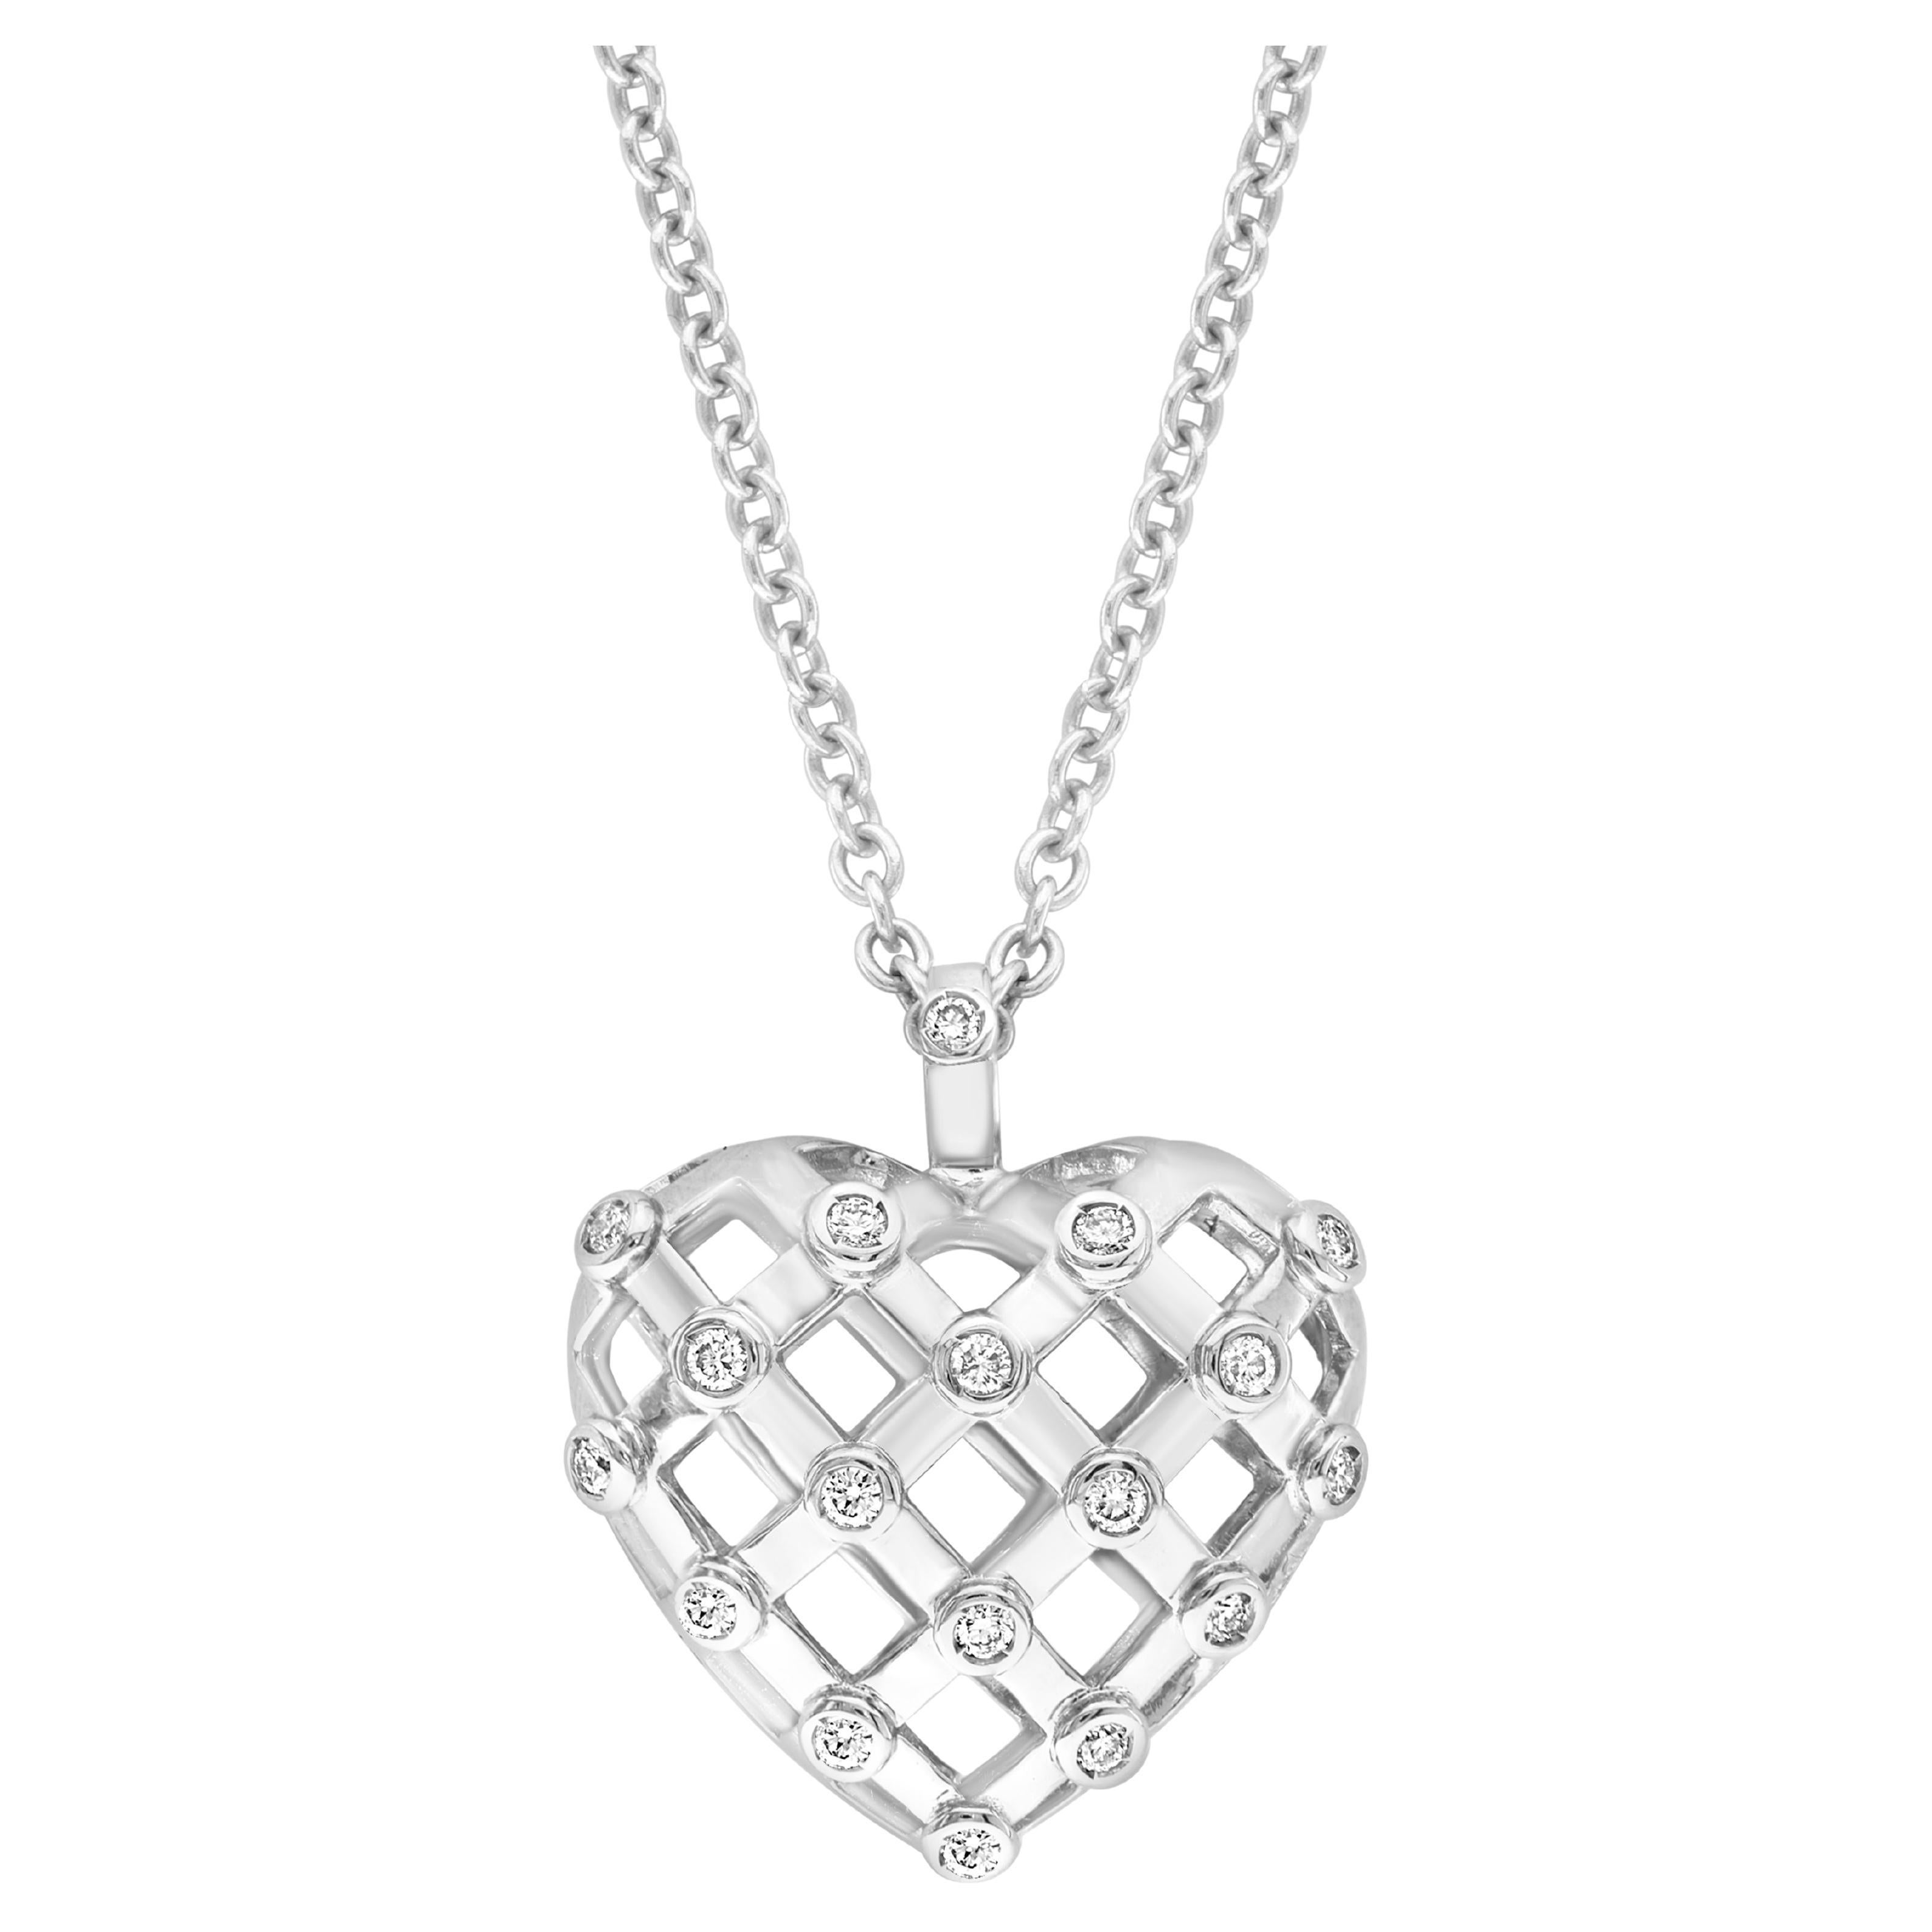 Tiffany & CO Heart Diamond Pendant Necklace 18K White Gold 0.50 CT 31" Long Chai For Sale